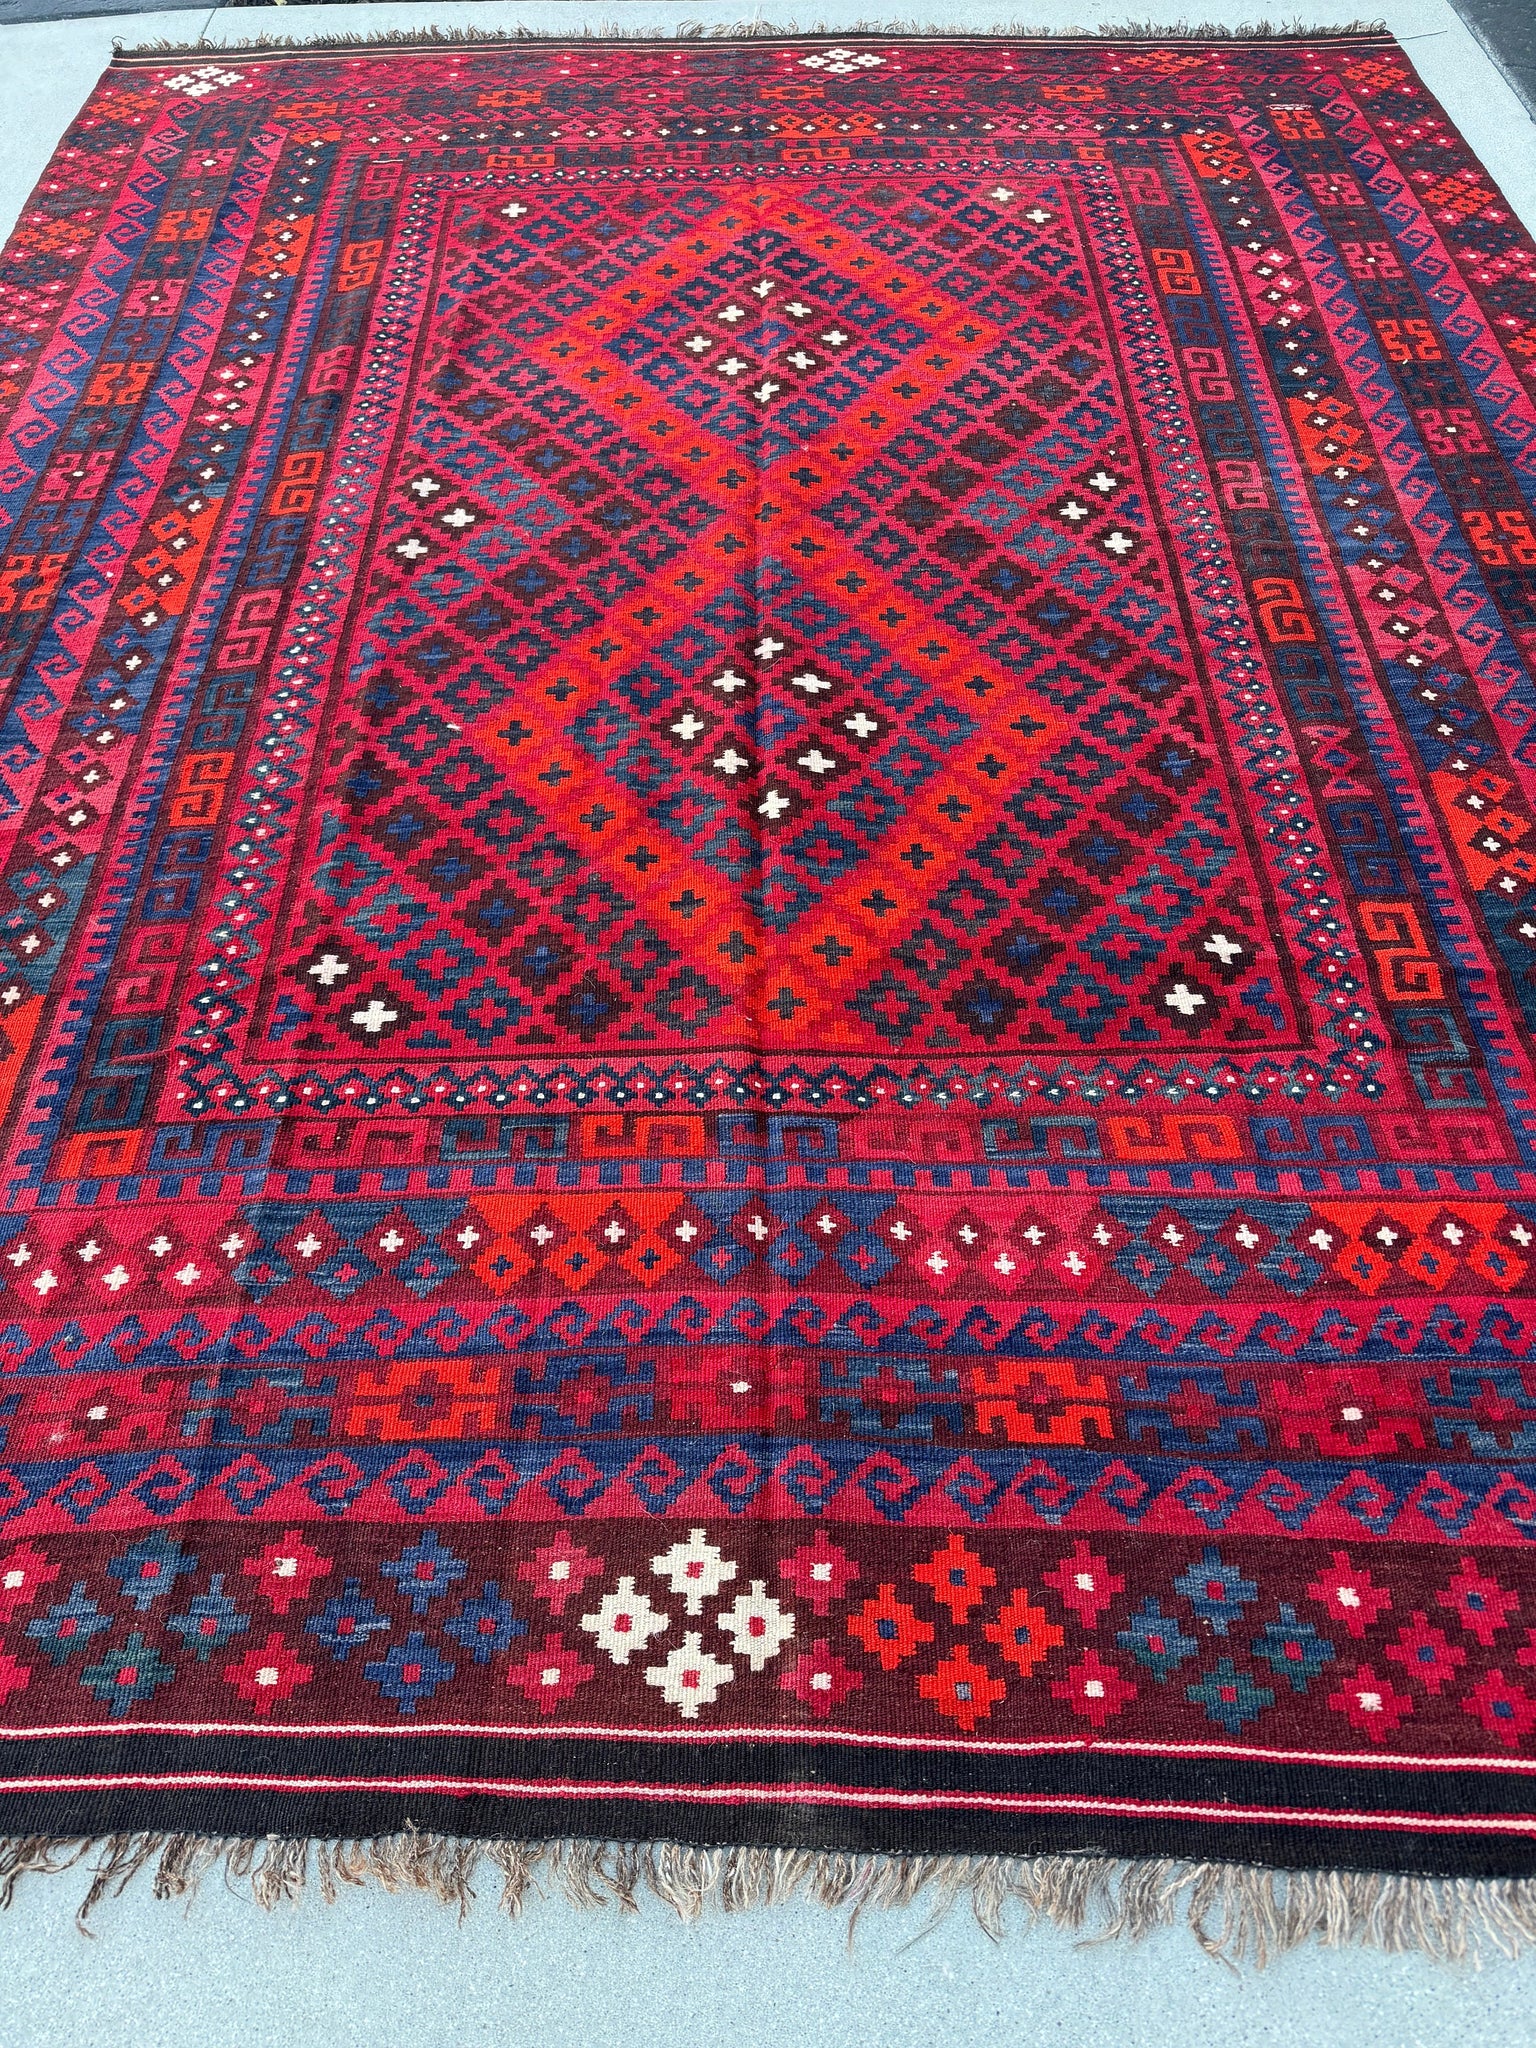 8x10 (244x251) Handmade Afghan Kilim Rug | Crimson Cherry Blood Red Navy Midnight Blue White Black Beige | Geometric Wool Flatweave